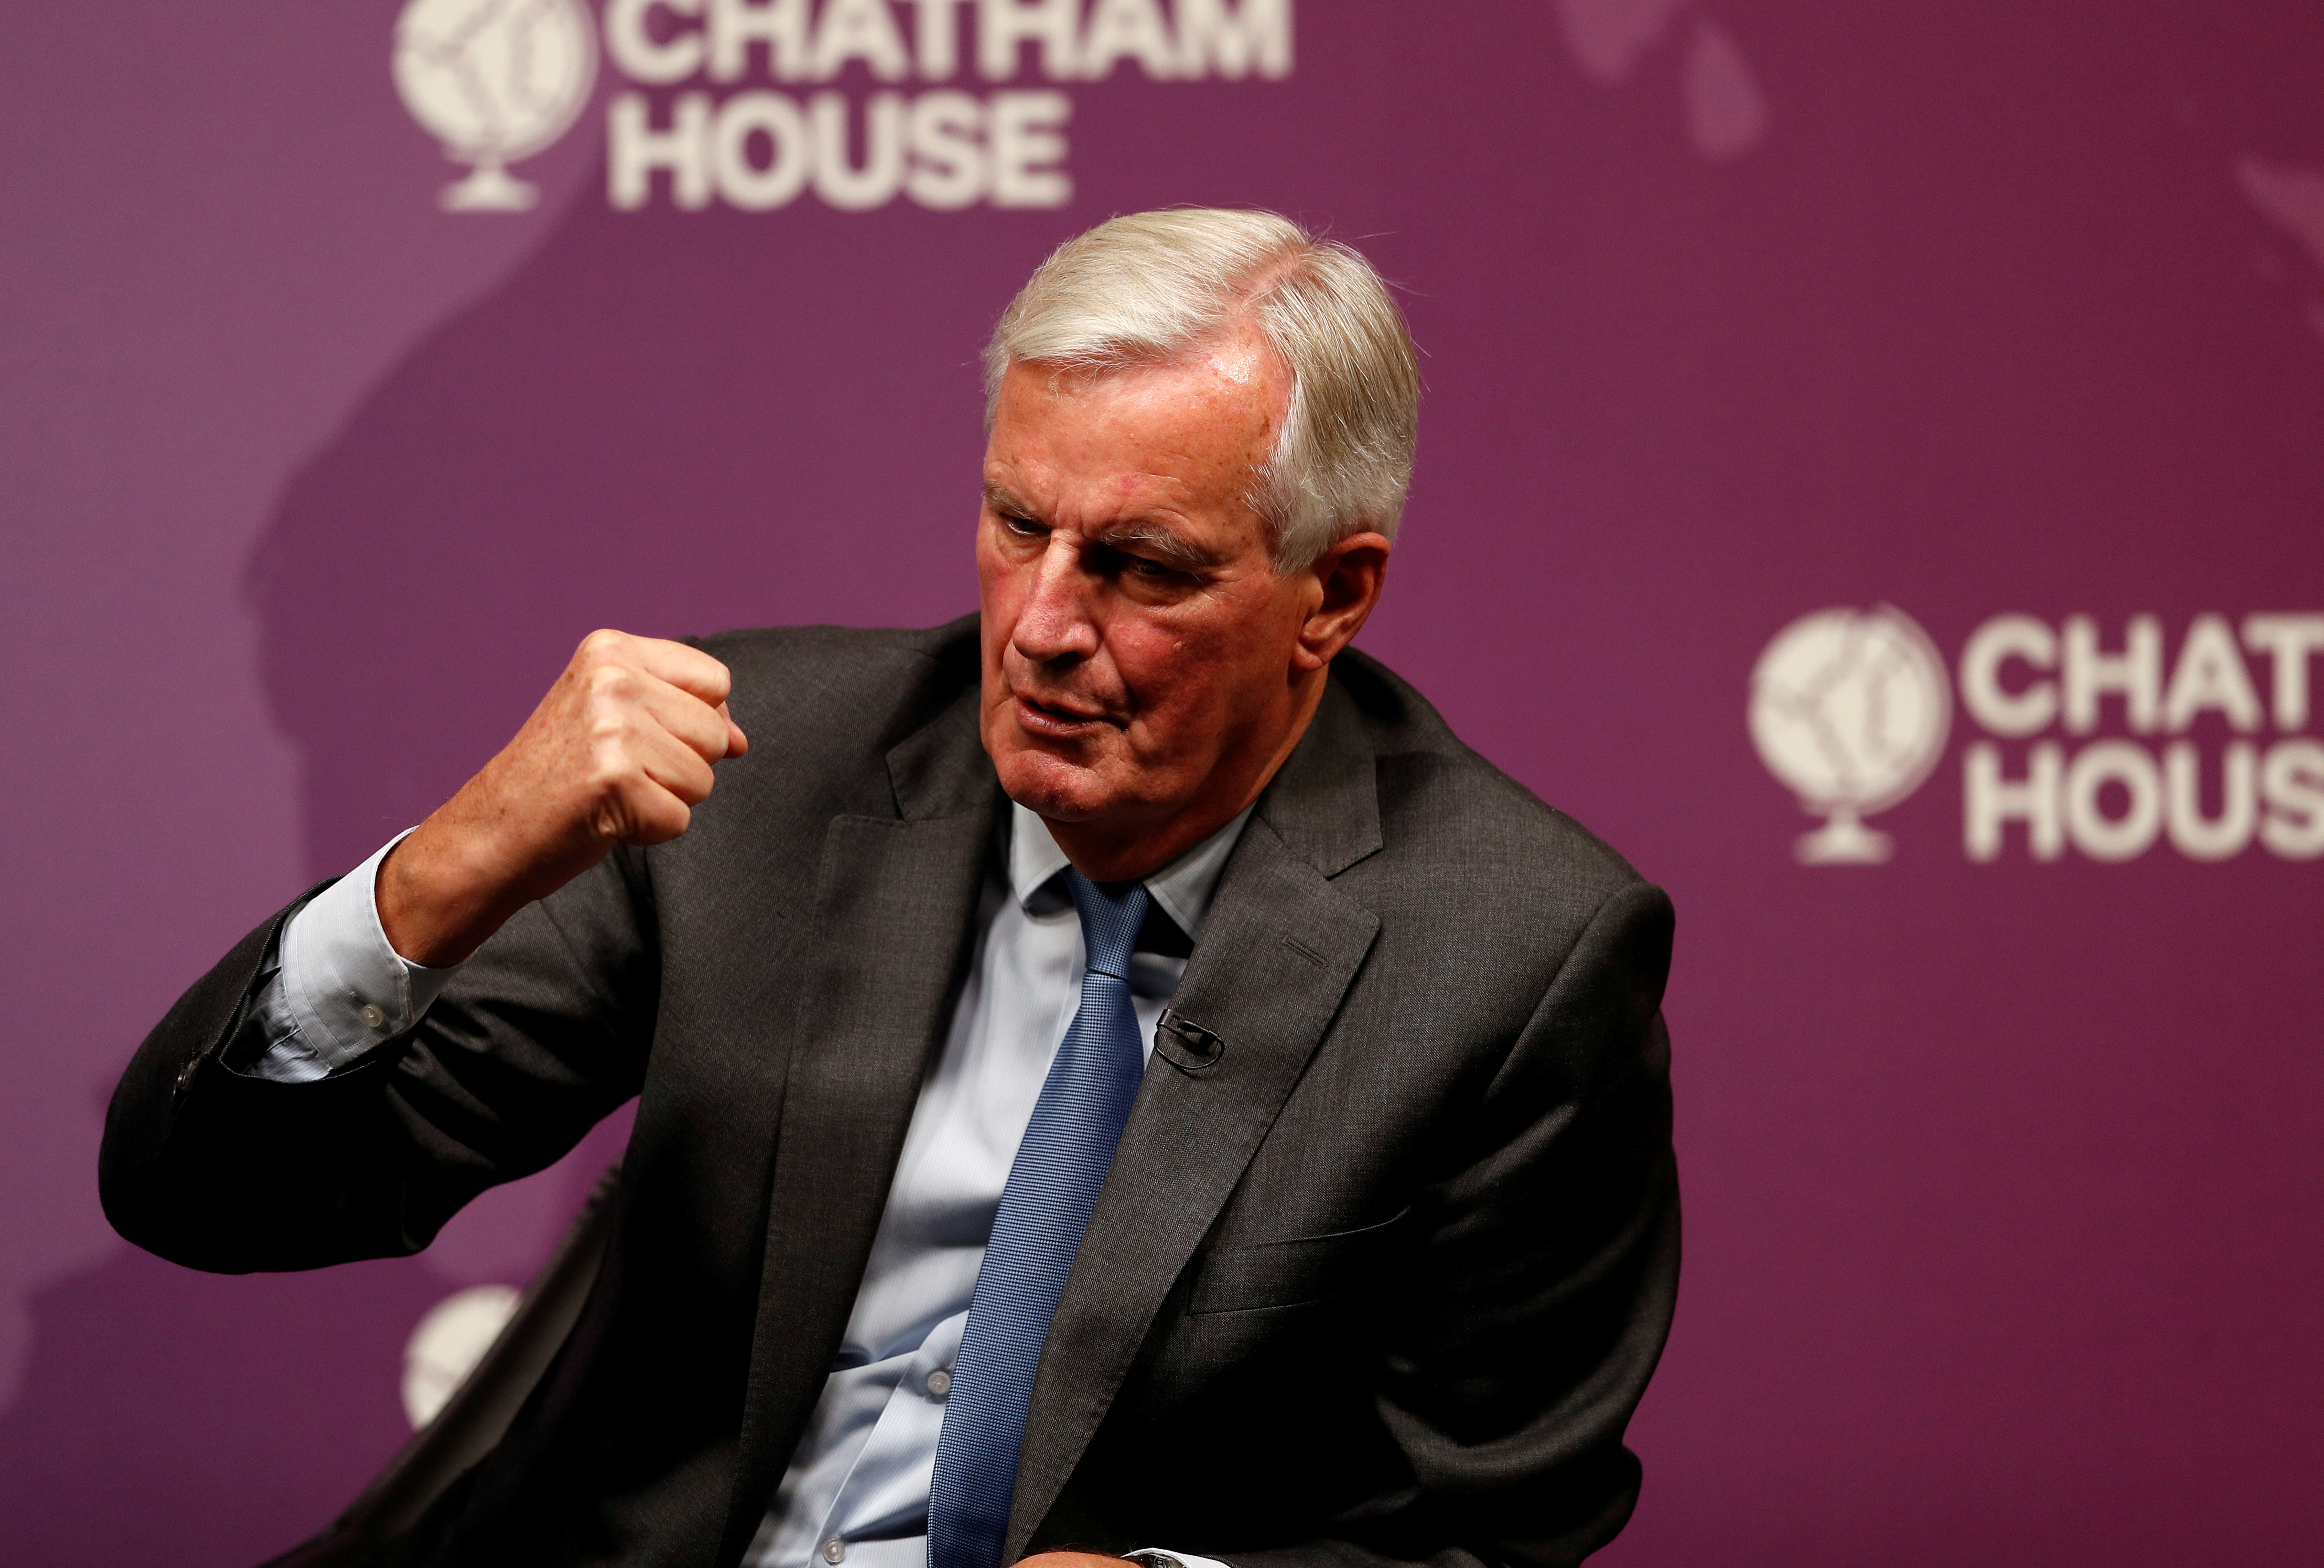 Former EU chief negotiator Michel Barnier speaks at Chatham House in London